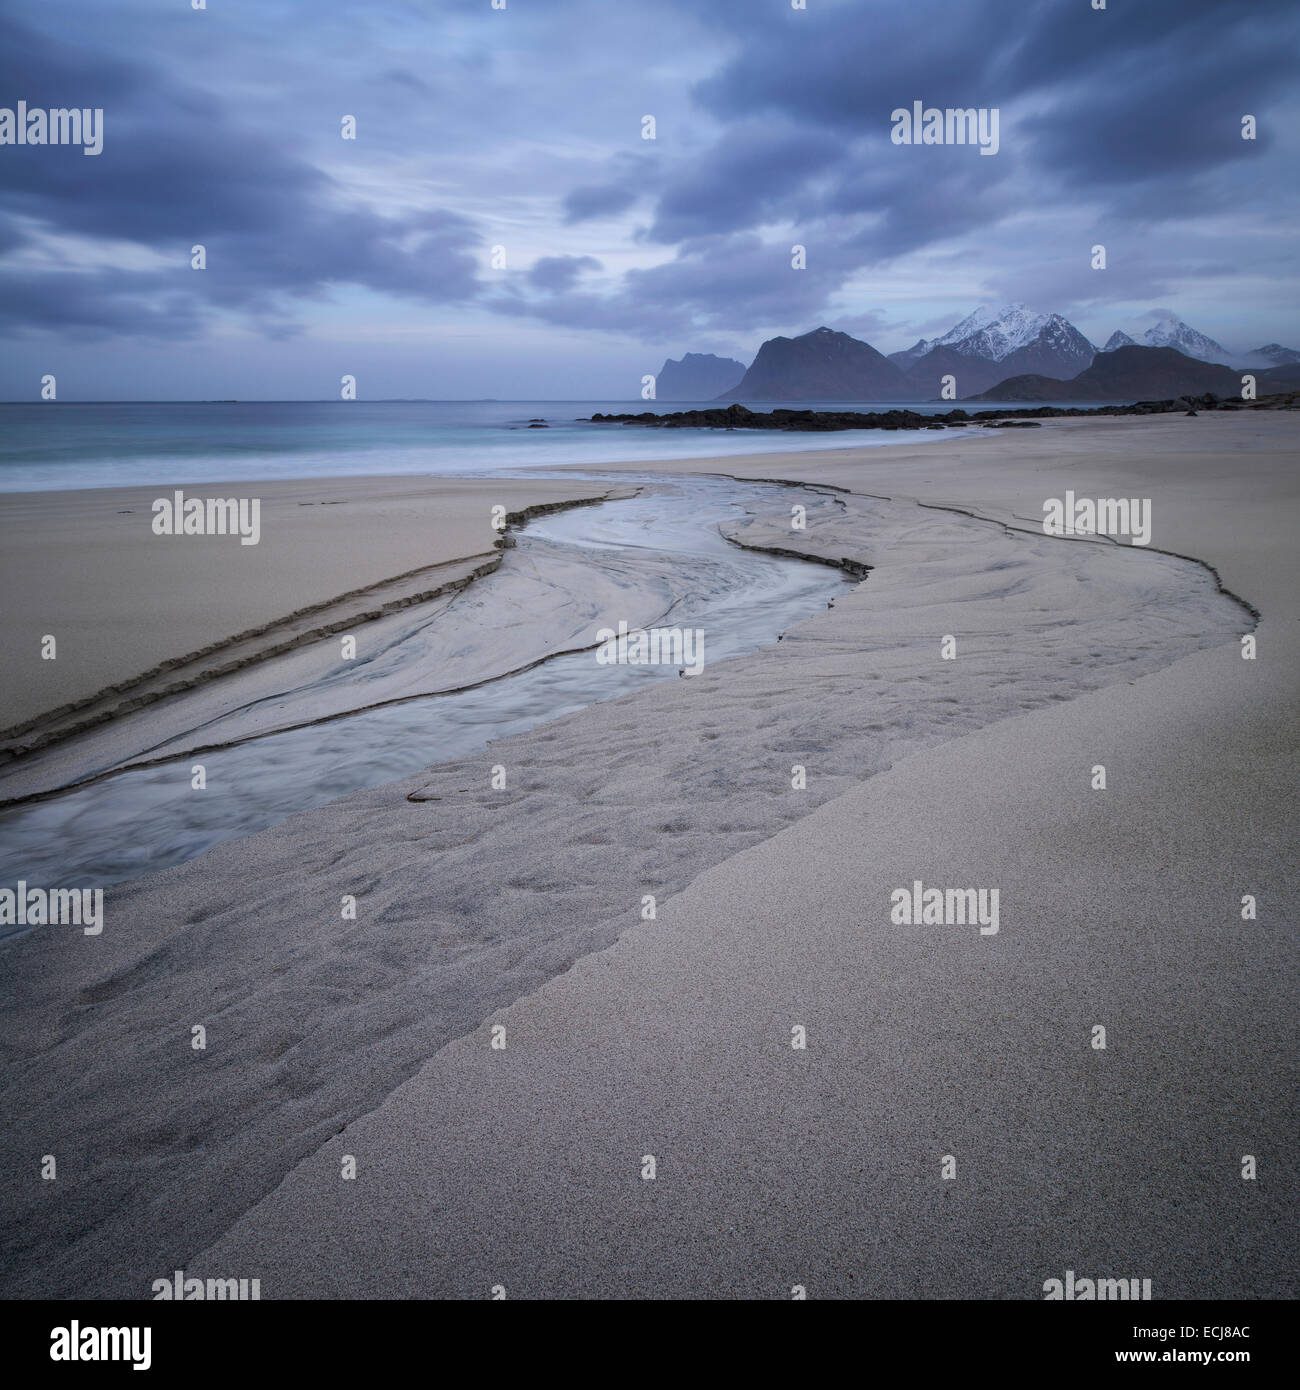 A small river runs through the sand at Storsandnes beach, Flakstadøy, Lofoten Islands, Norway Stock Photo